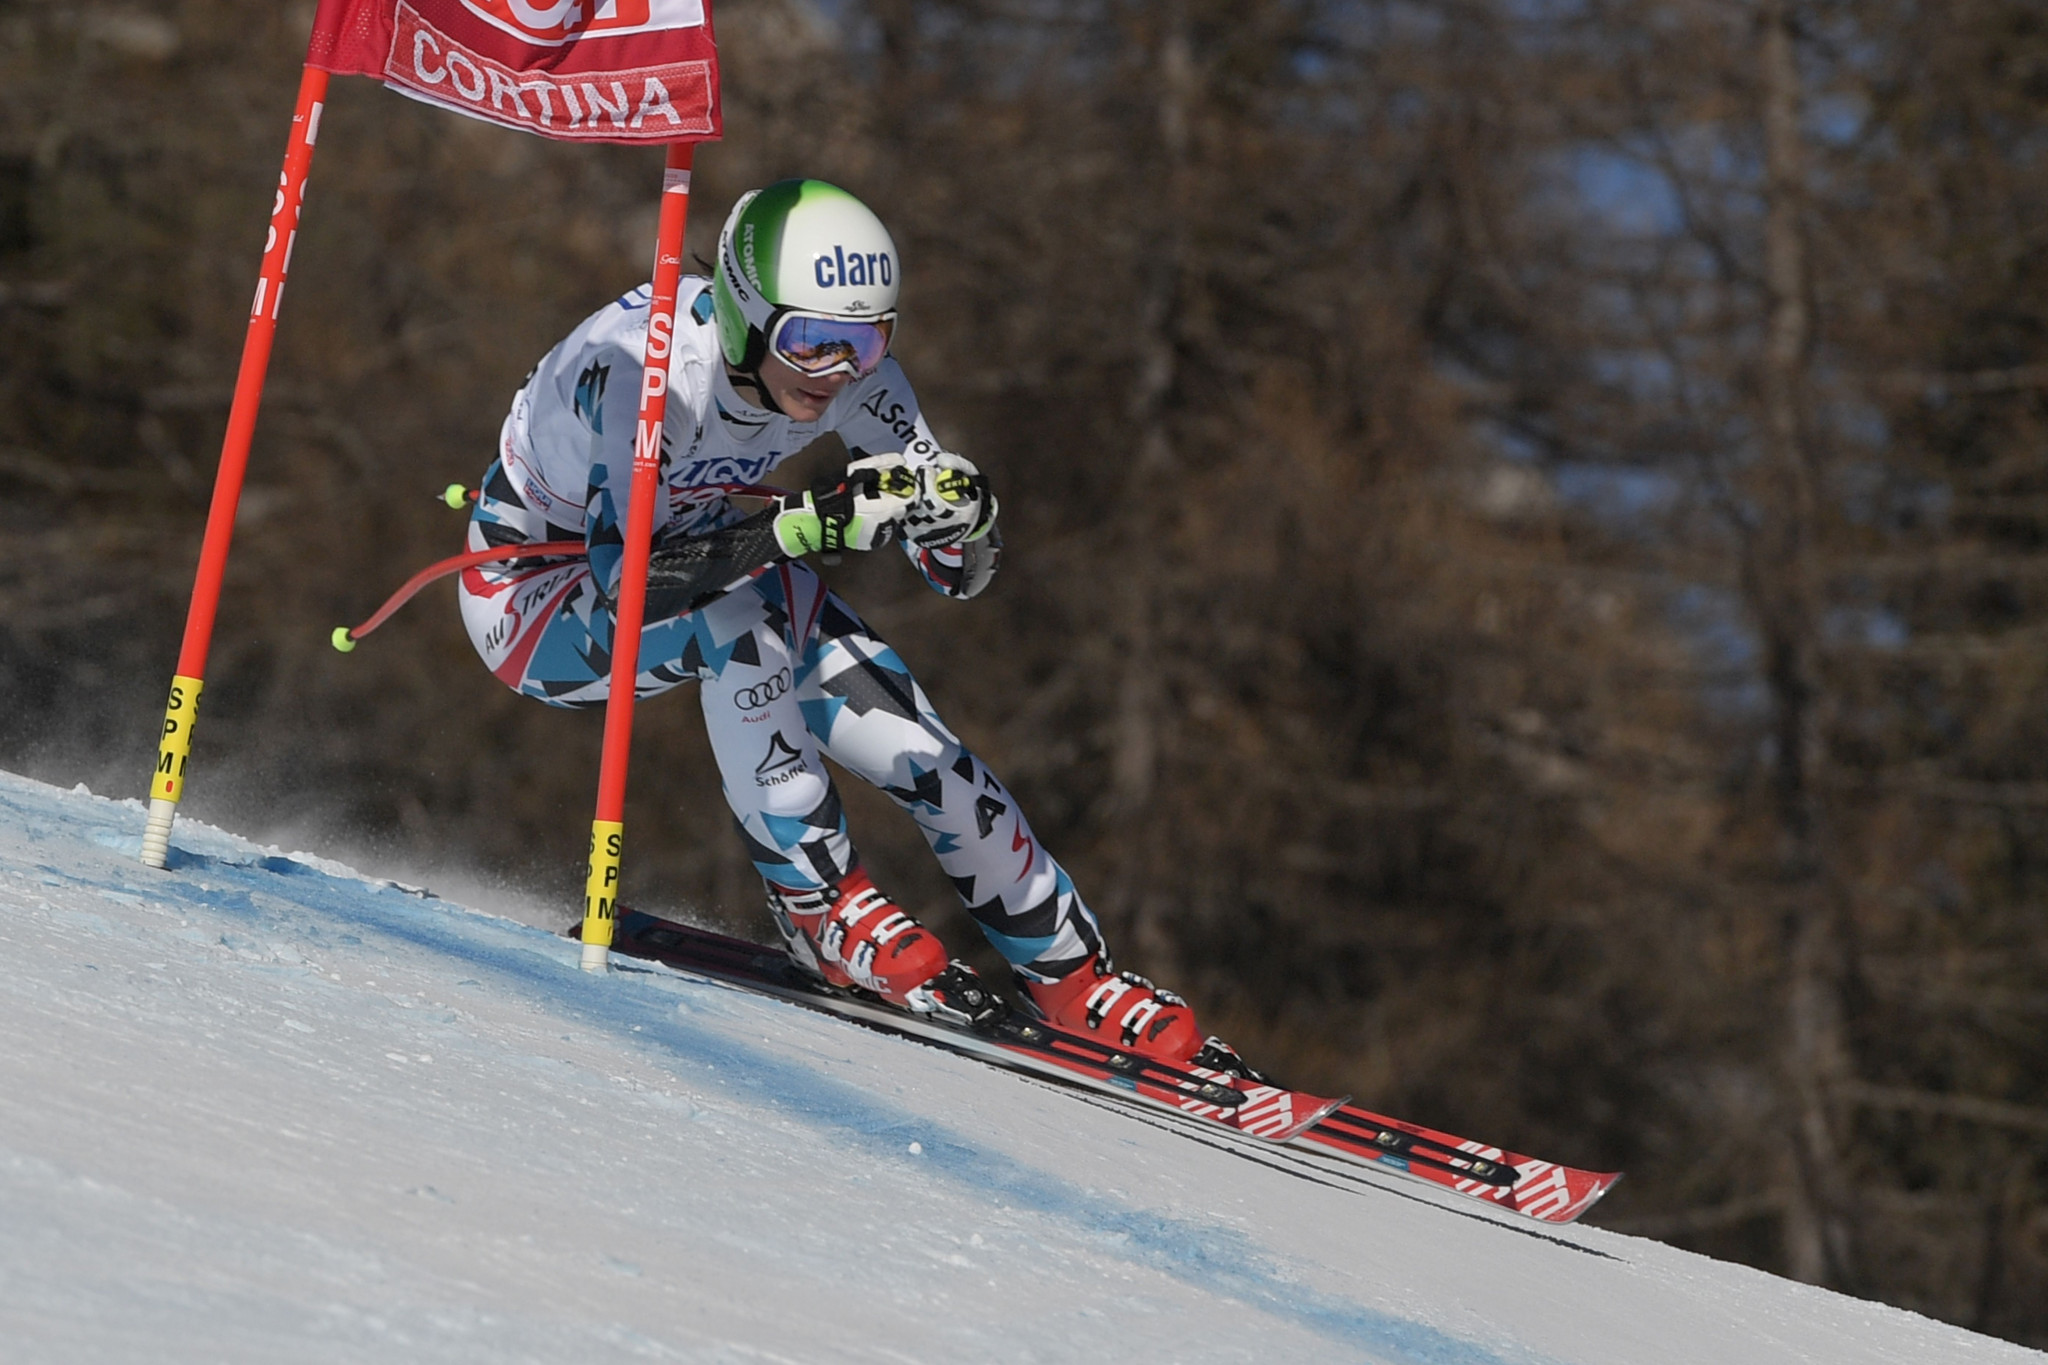 FIS claim progress being made at 2021 Alpine World Ski Championships venue in Cortina d’Ampezzo